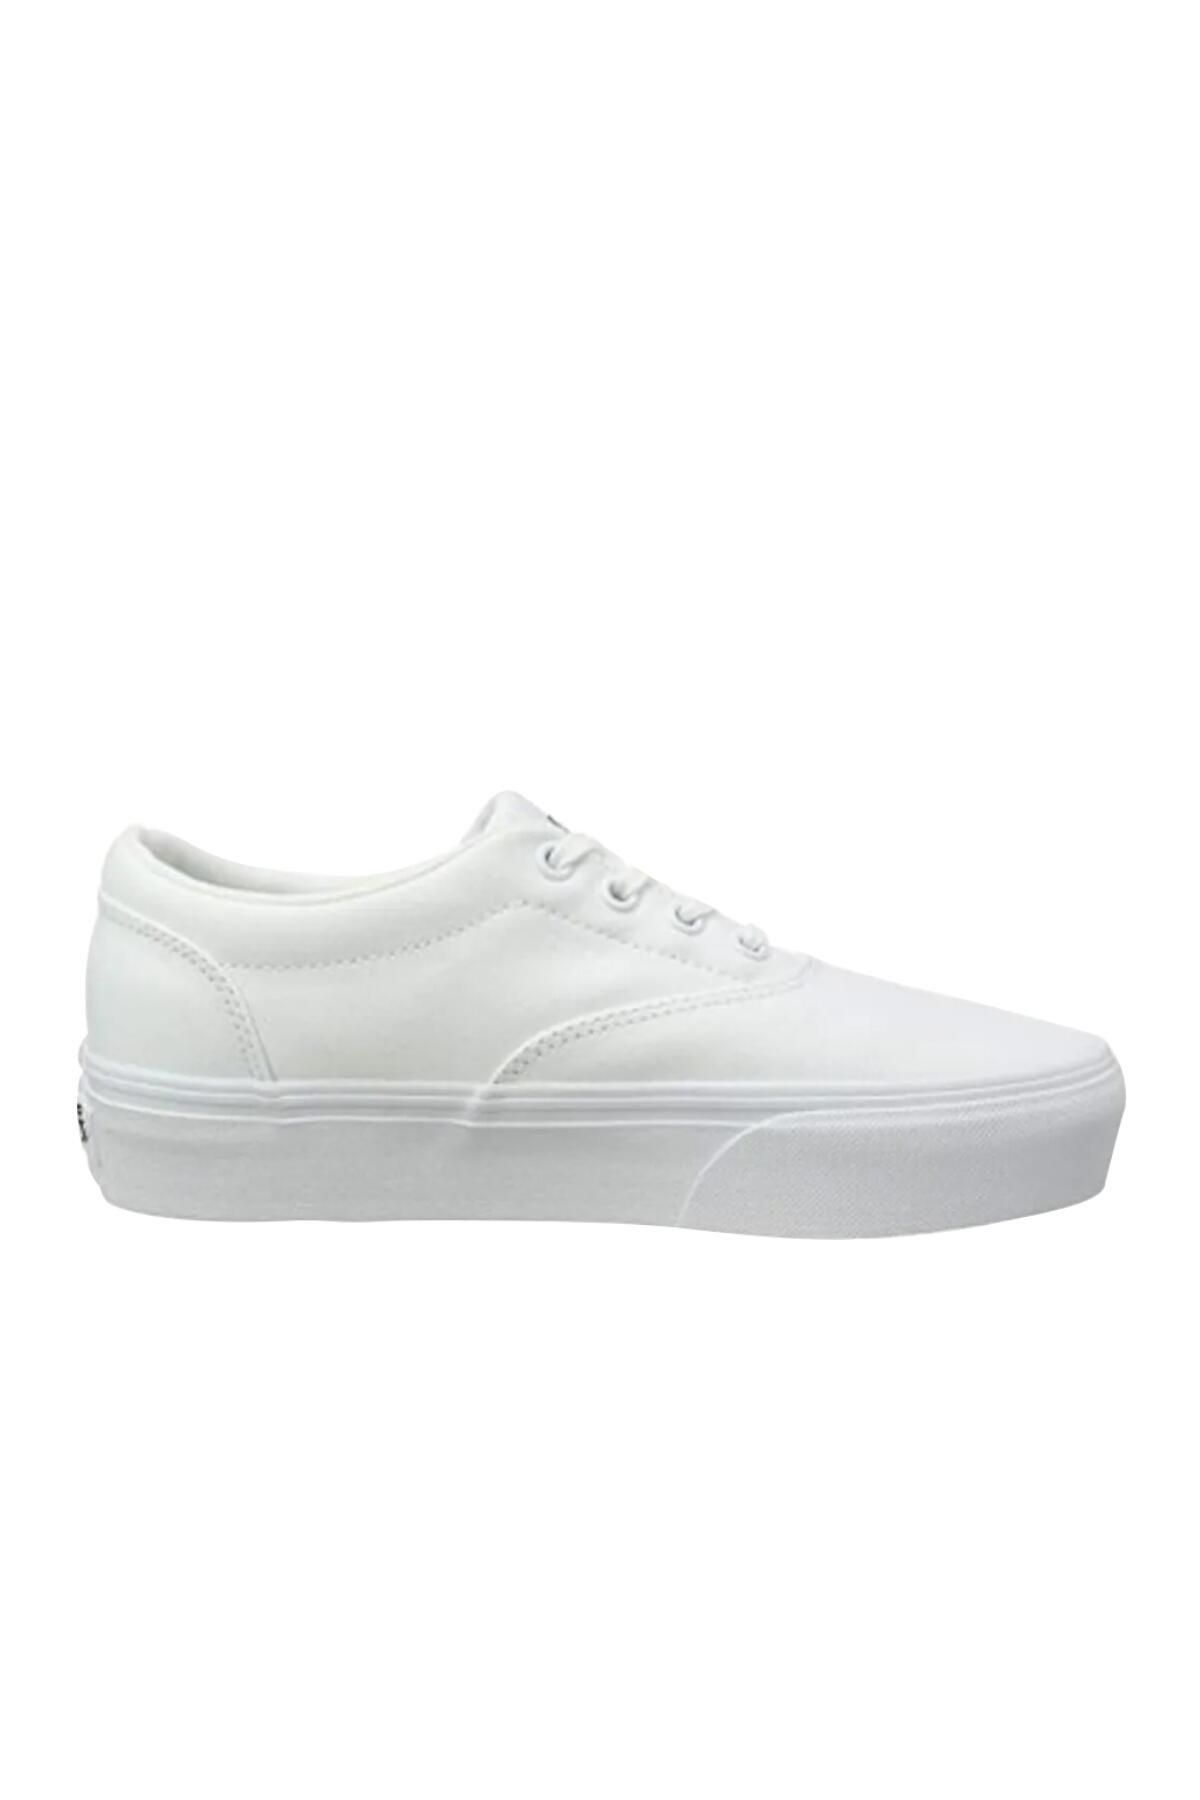 Vans Wm Doheny Platform Beyaz Kadın Spor Ayakkabı Vn0a4u210rg1